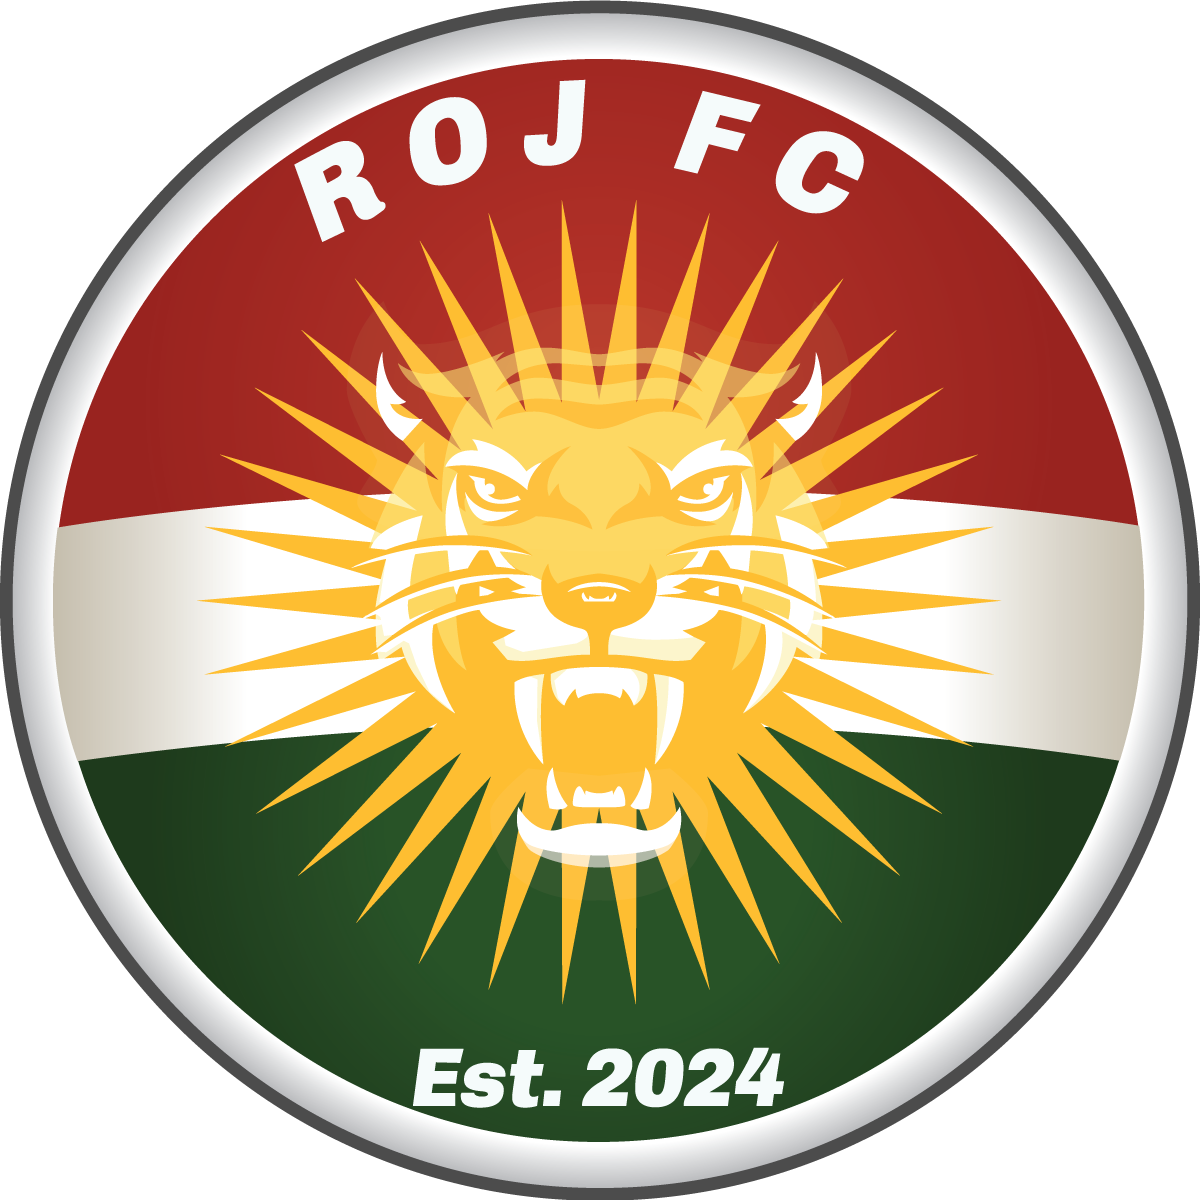 Roj-FC-banner